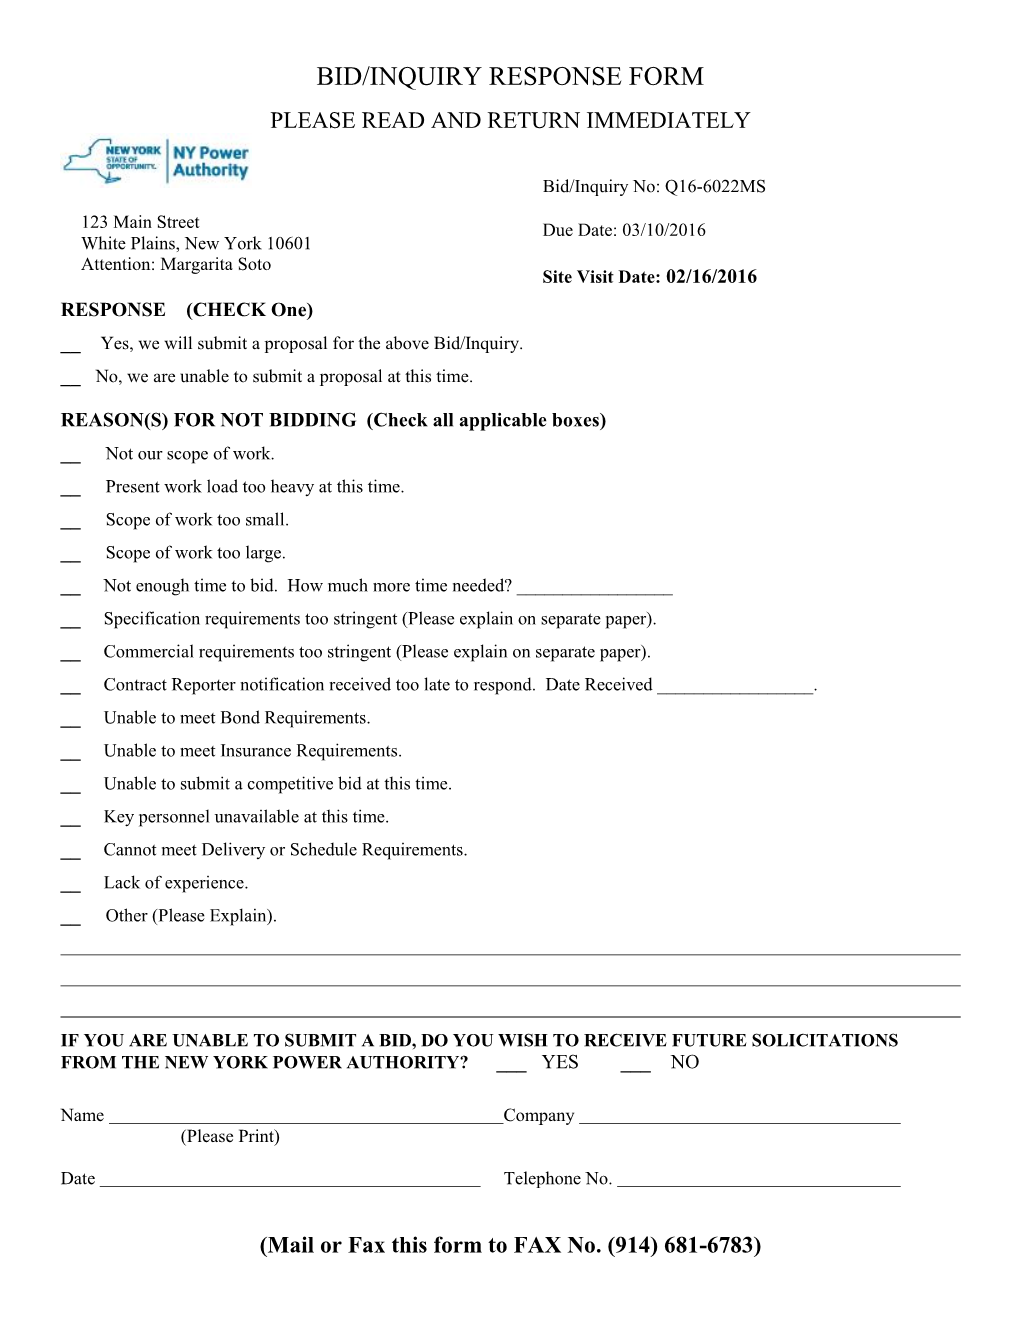 Bid/Inquiry Response Form Please Read and Return Immediately